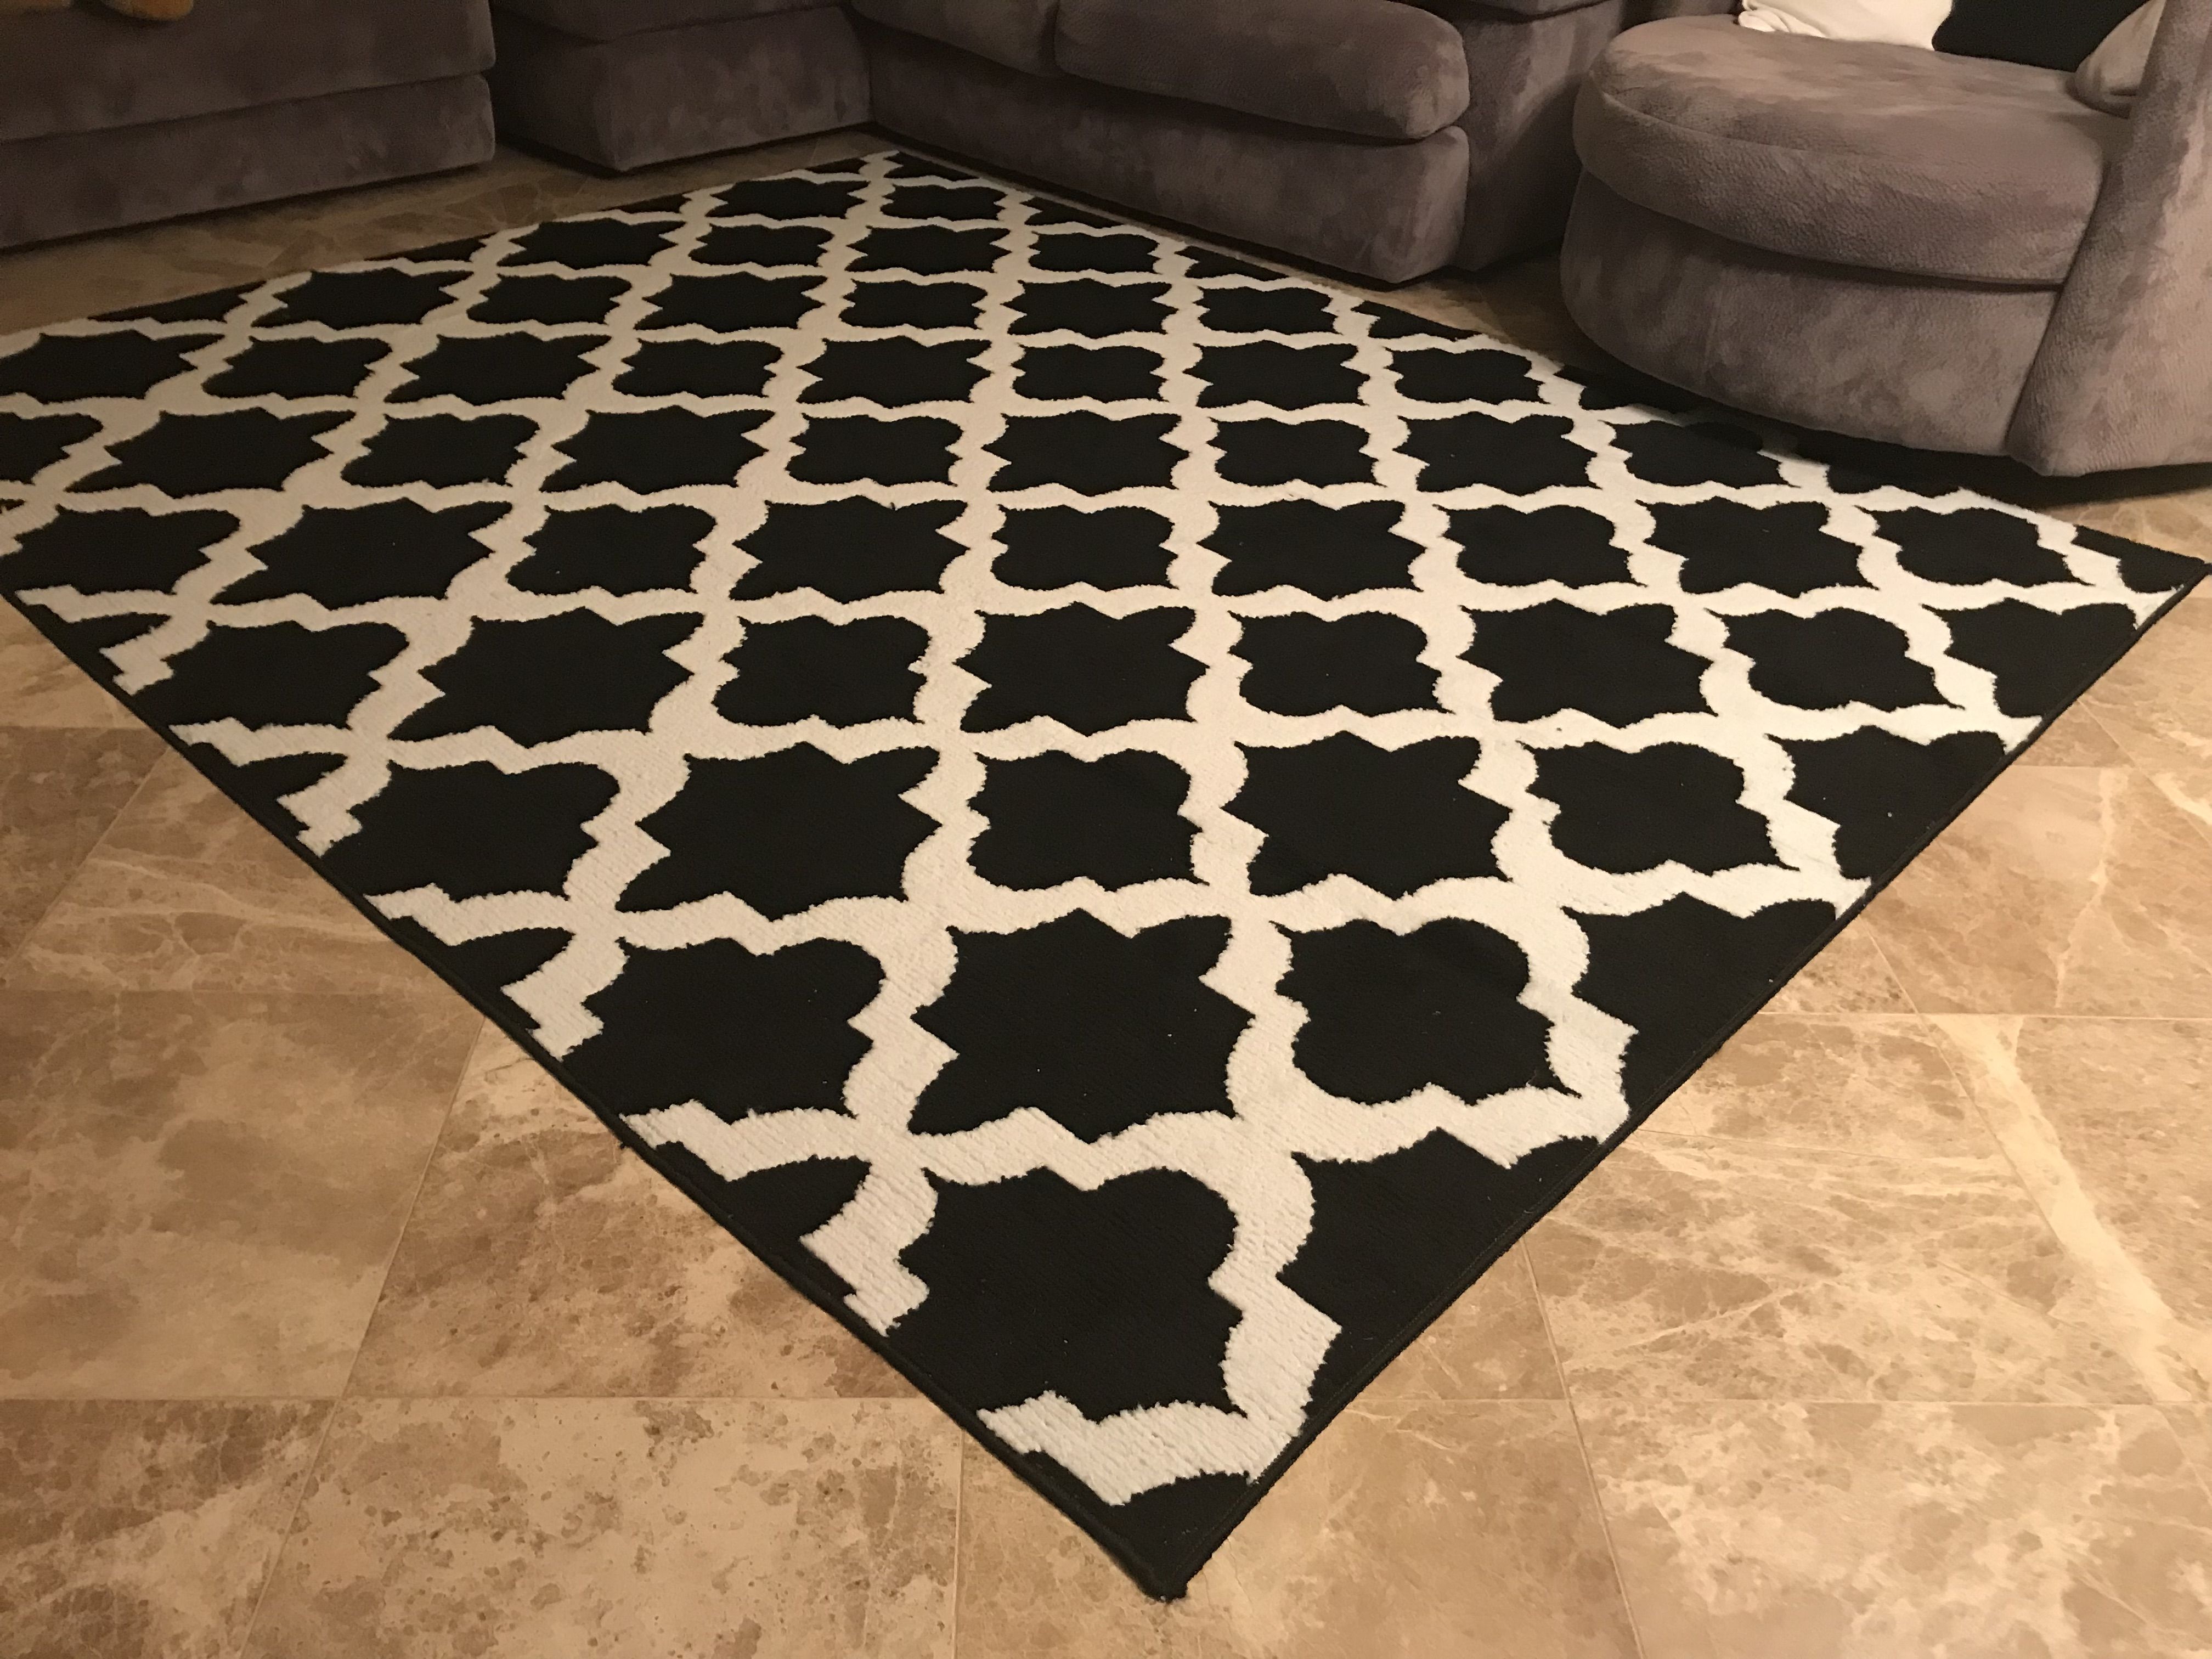 Black and white modern rug